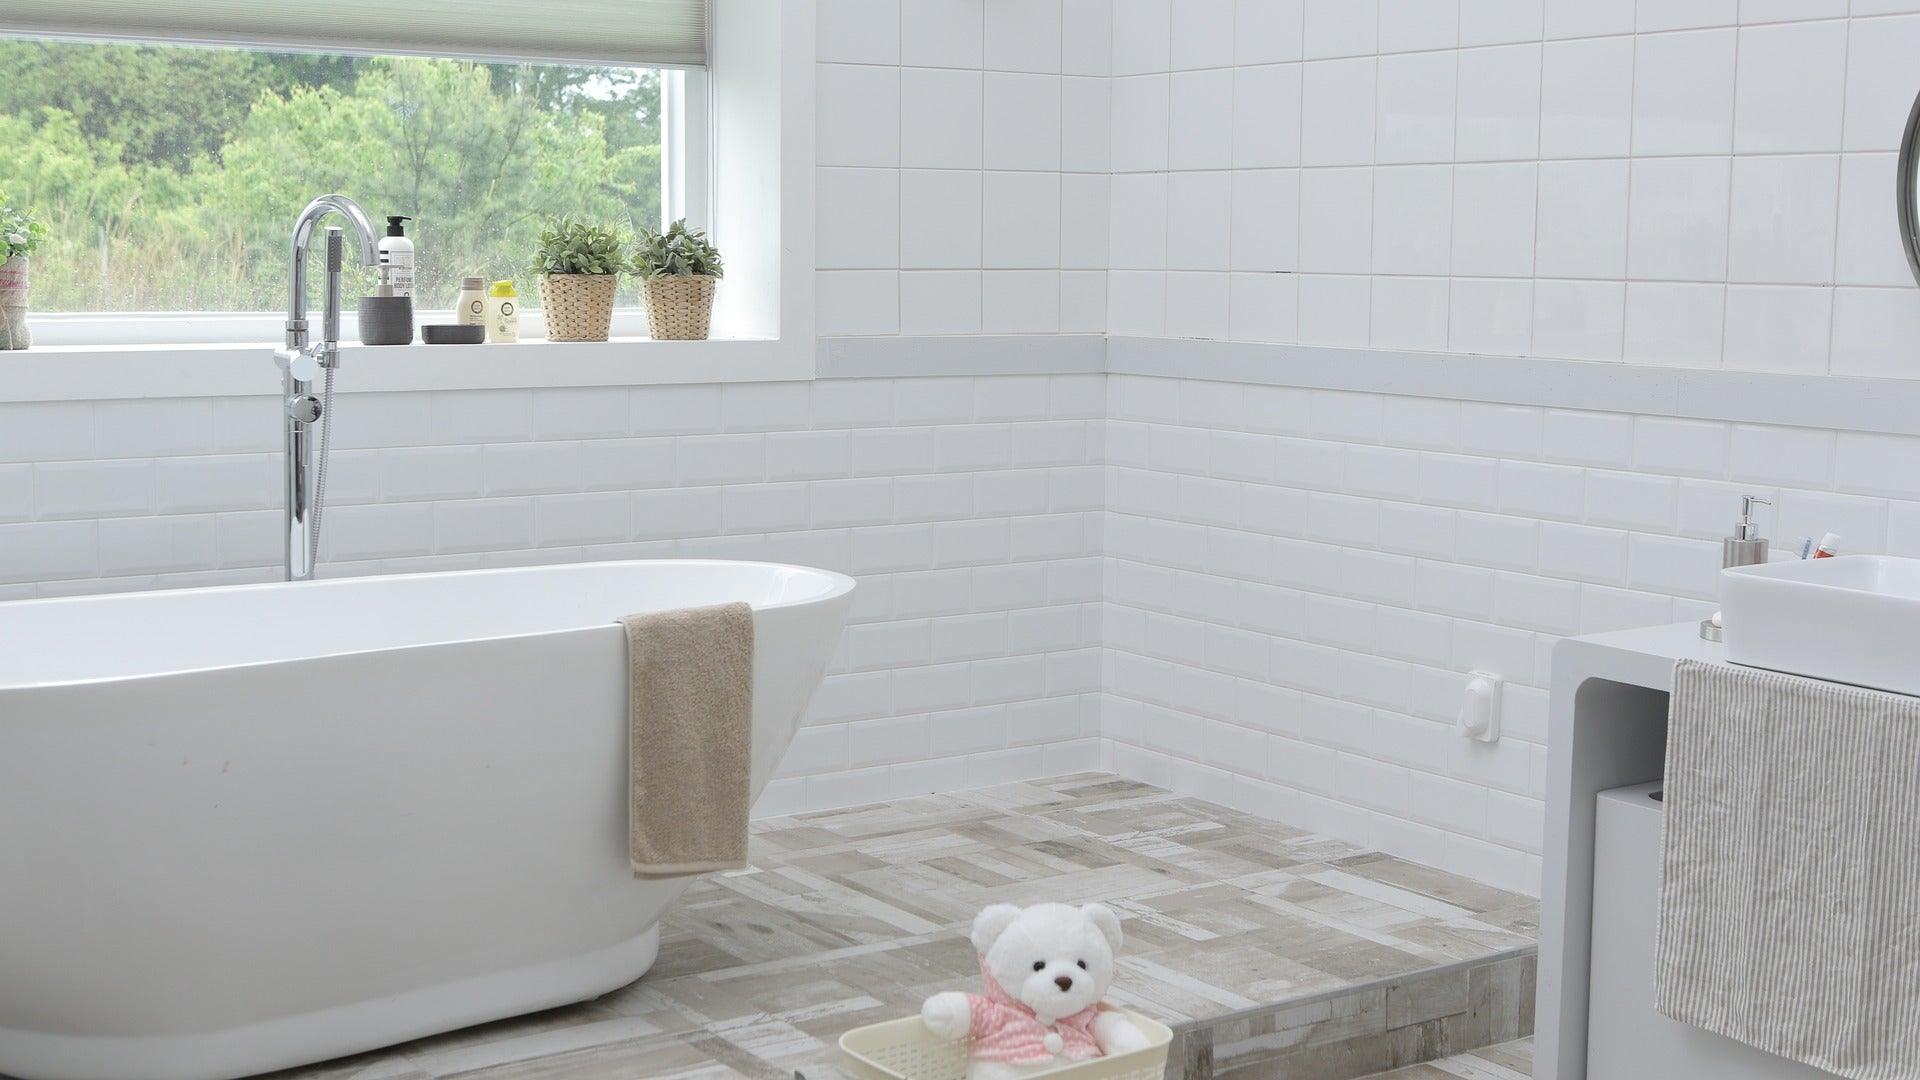 The Last Bathroom Renovation Guide You'll Ever Need - Bathroom Design Center